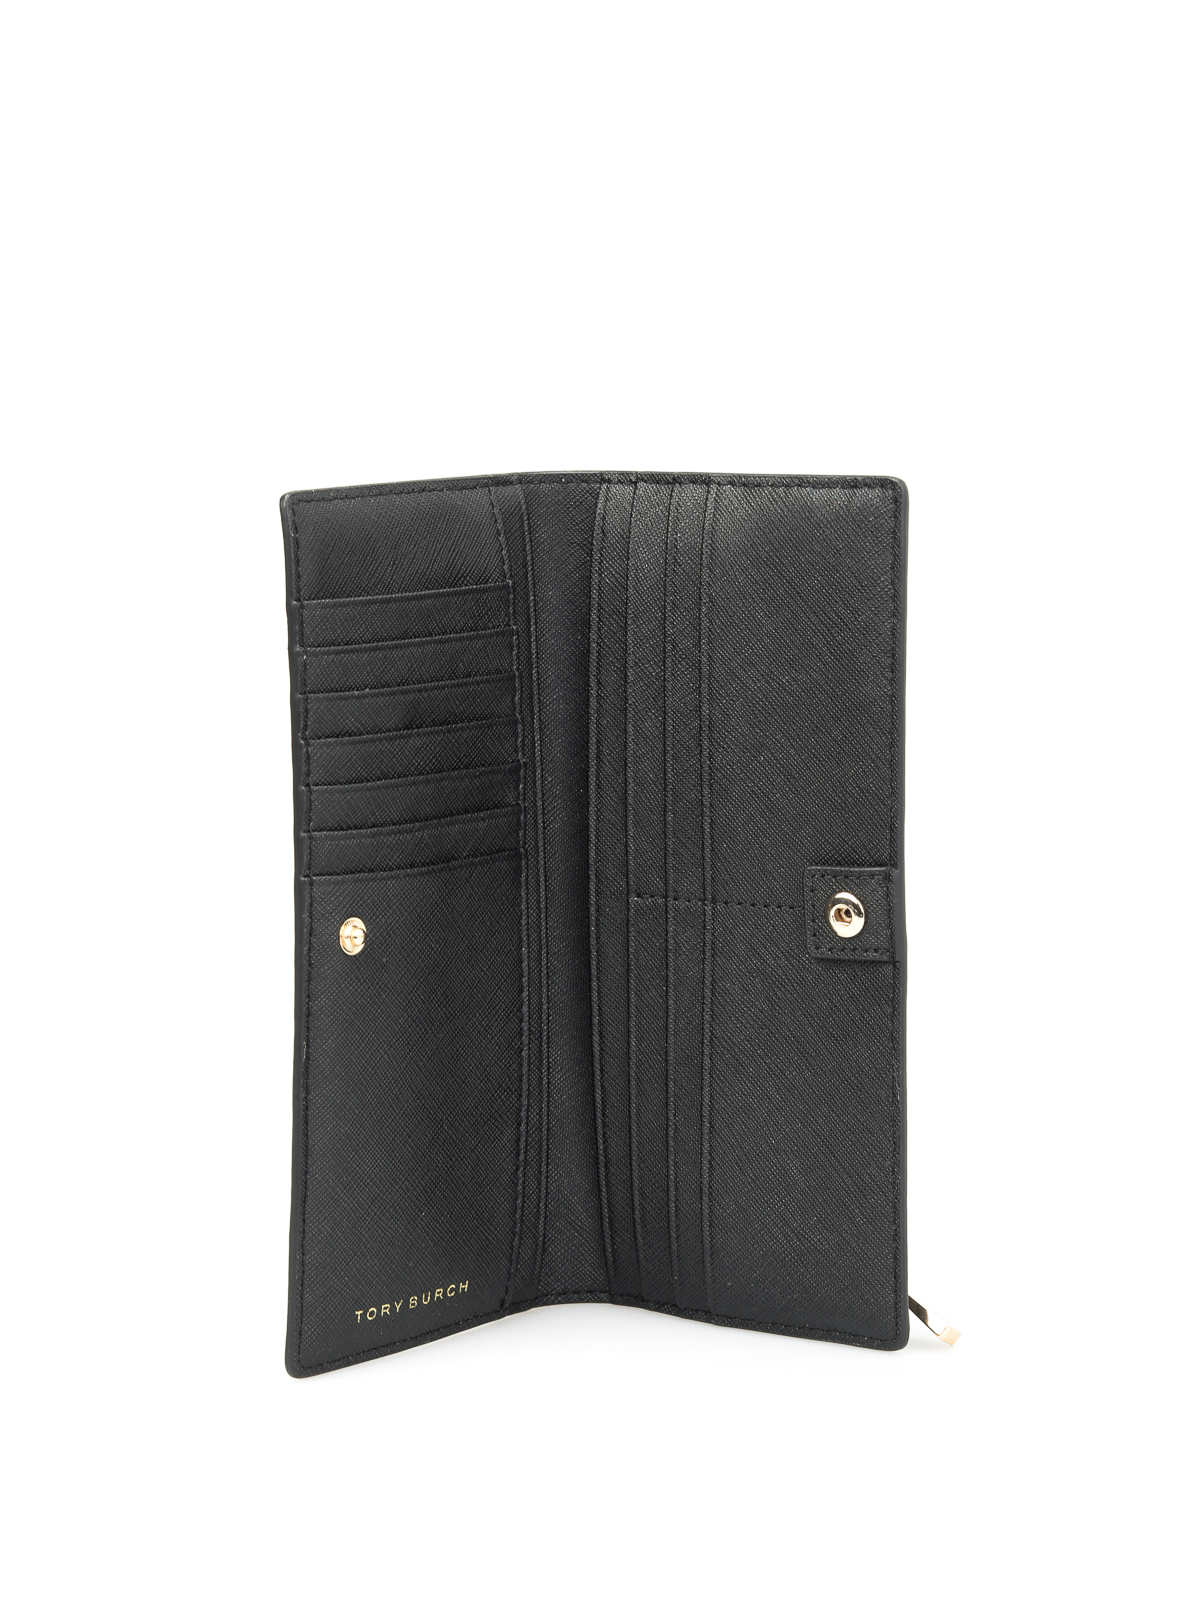 Wallets & purses Tory Burch - Robinson slim wallet - 33044001 